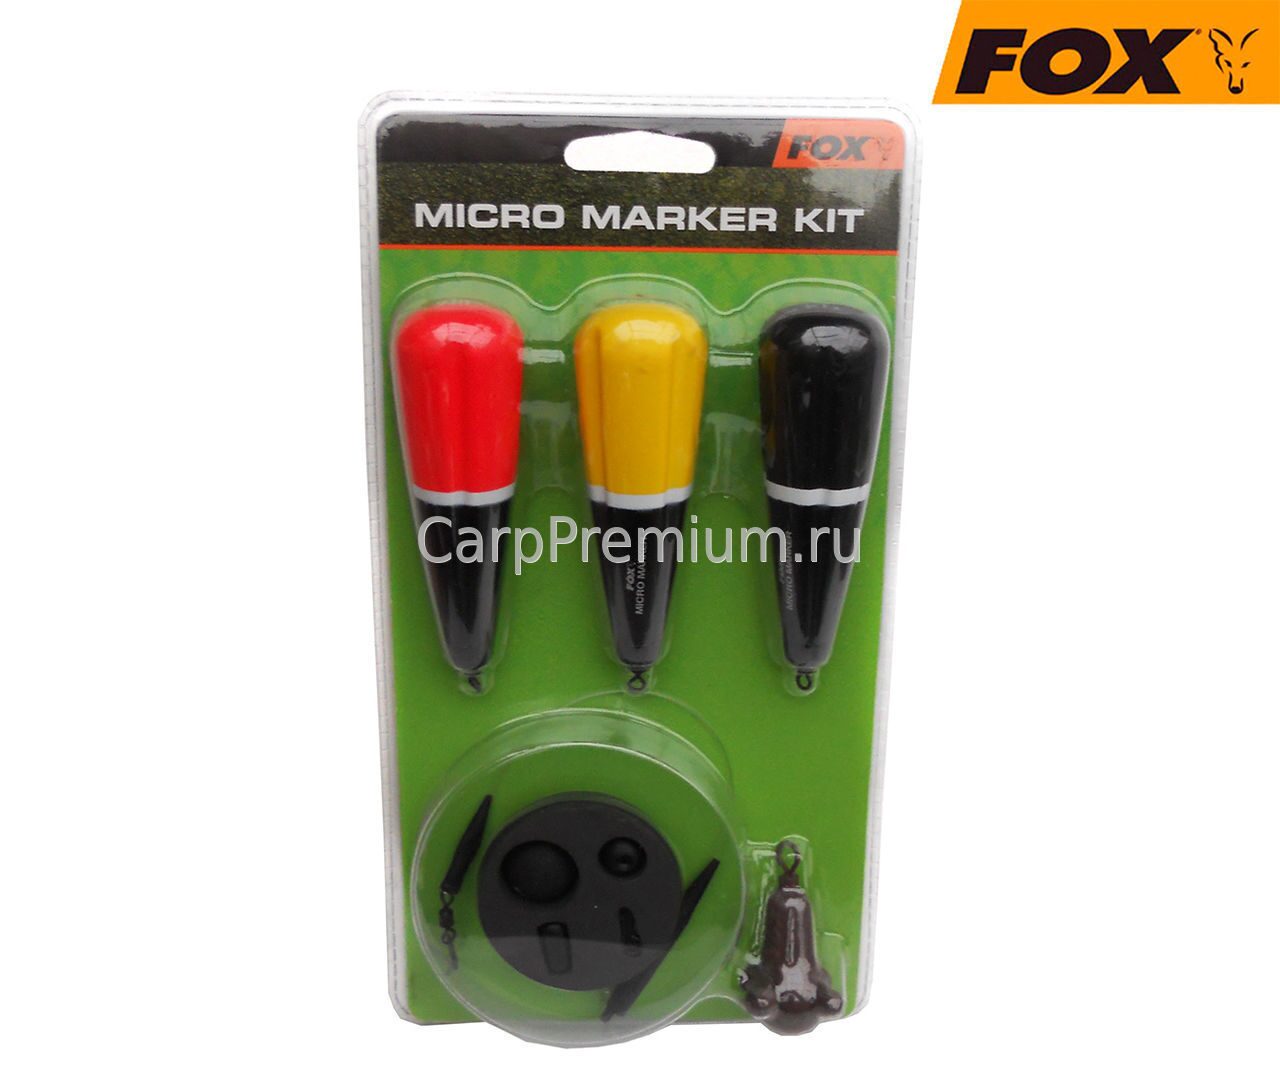 Набор для маркера малый + грузило Fox (Фокс) - Micro Marker Kit 57г / 2.0oz